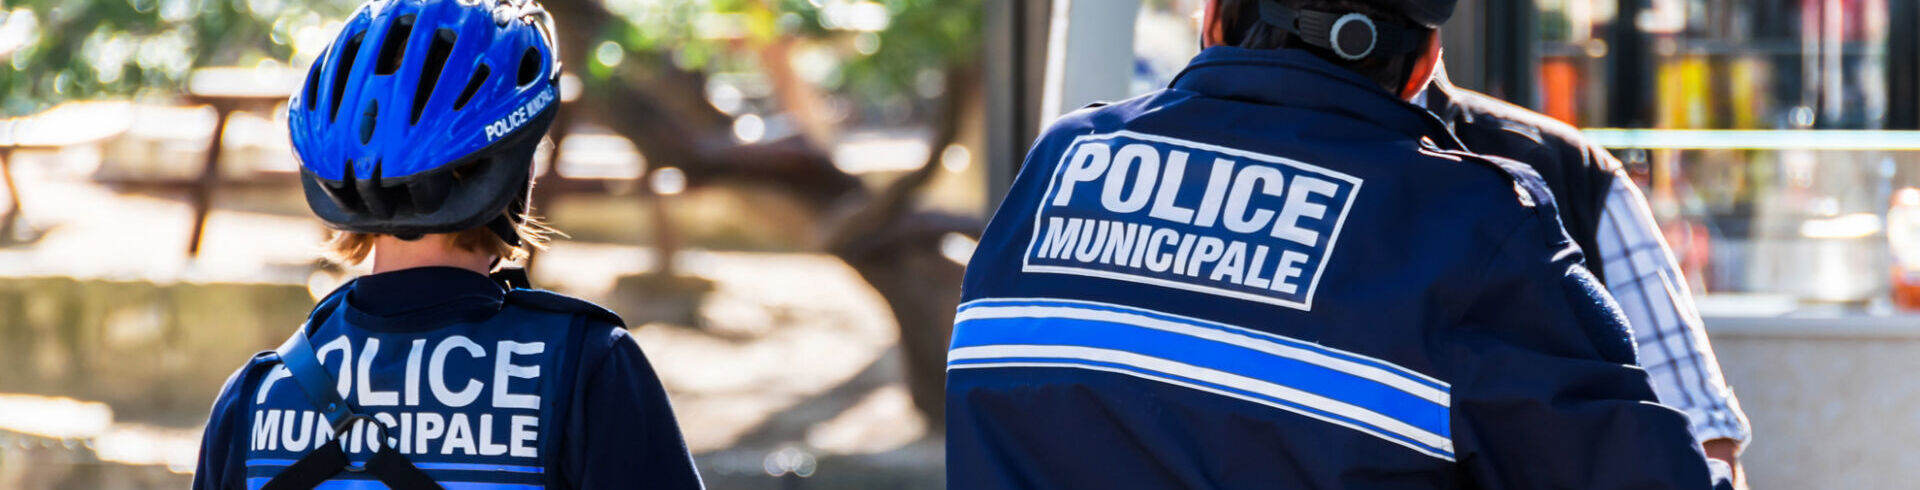 Concours police municipale